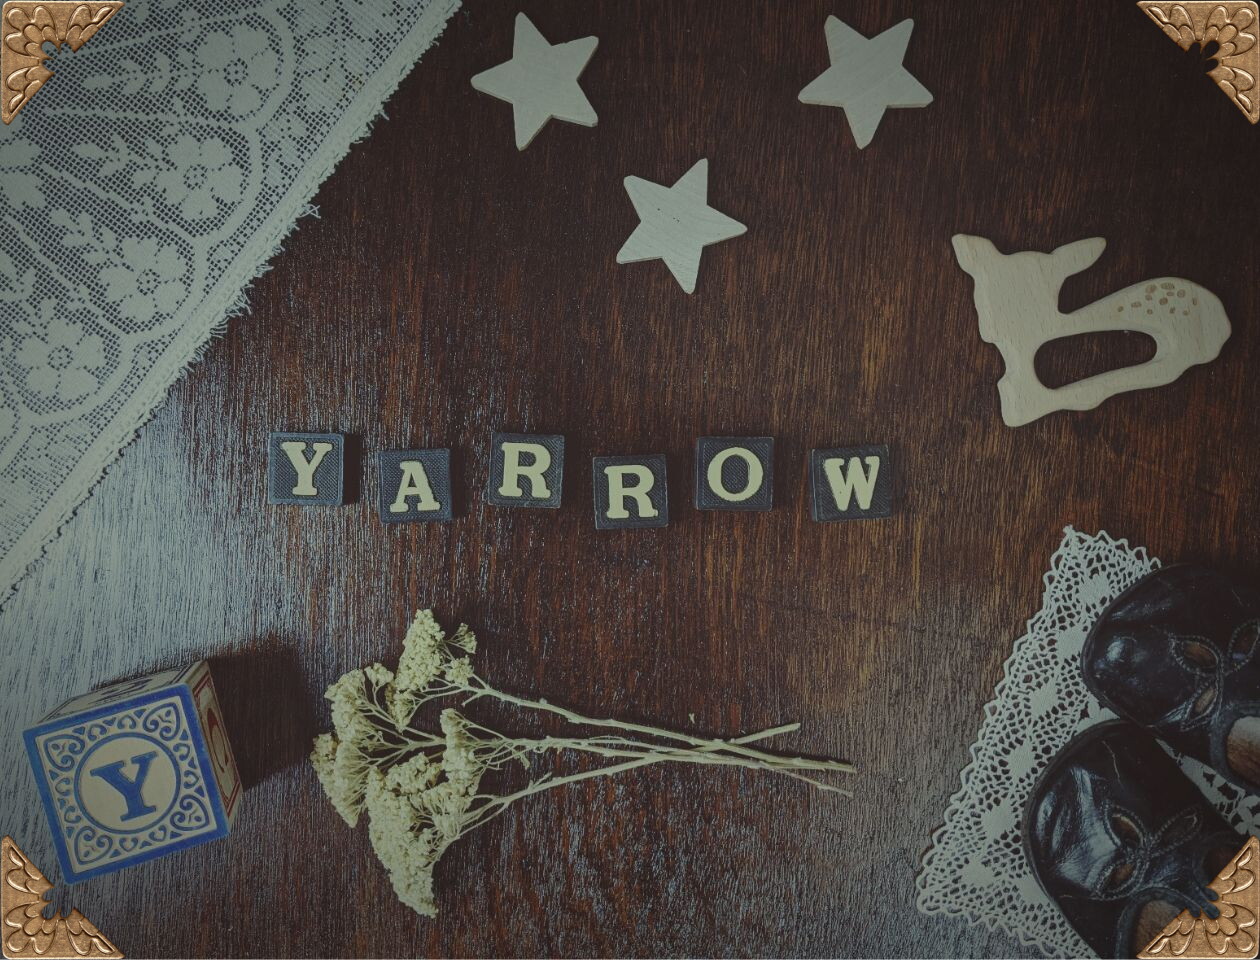 Yarrow